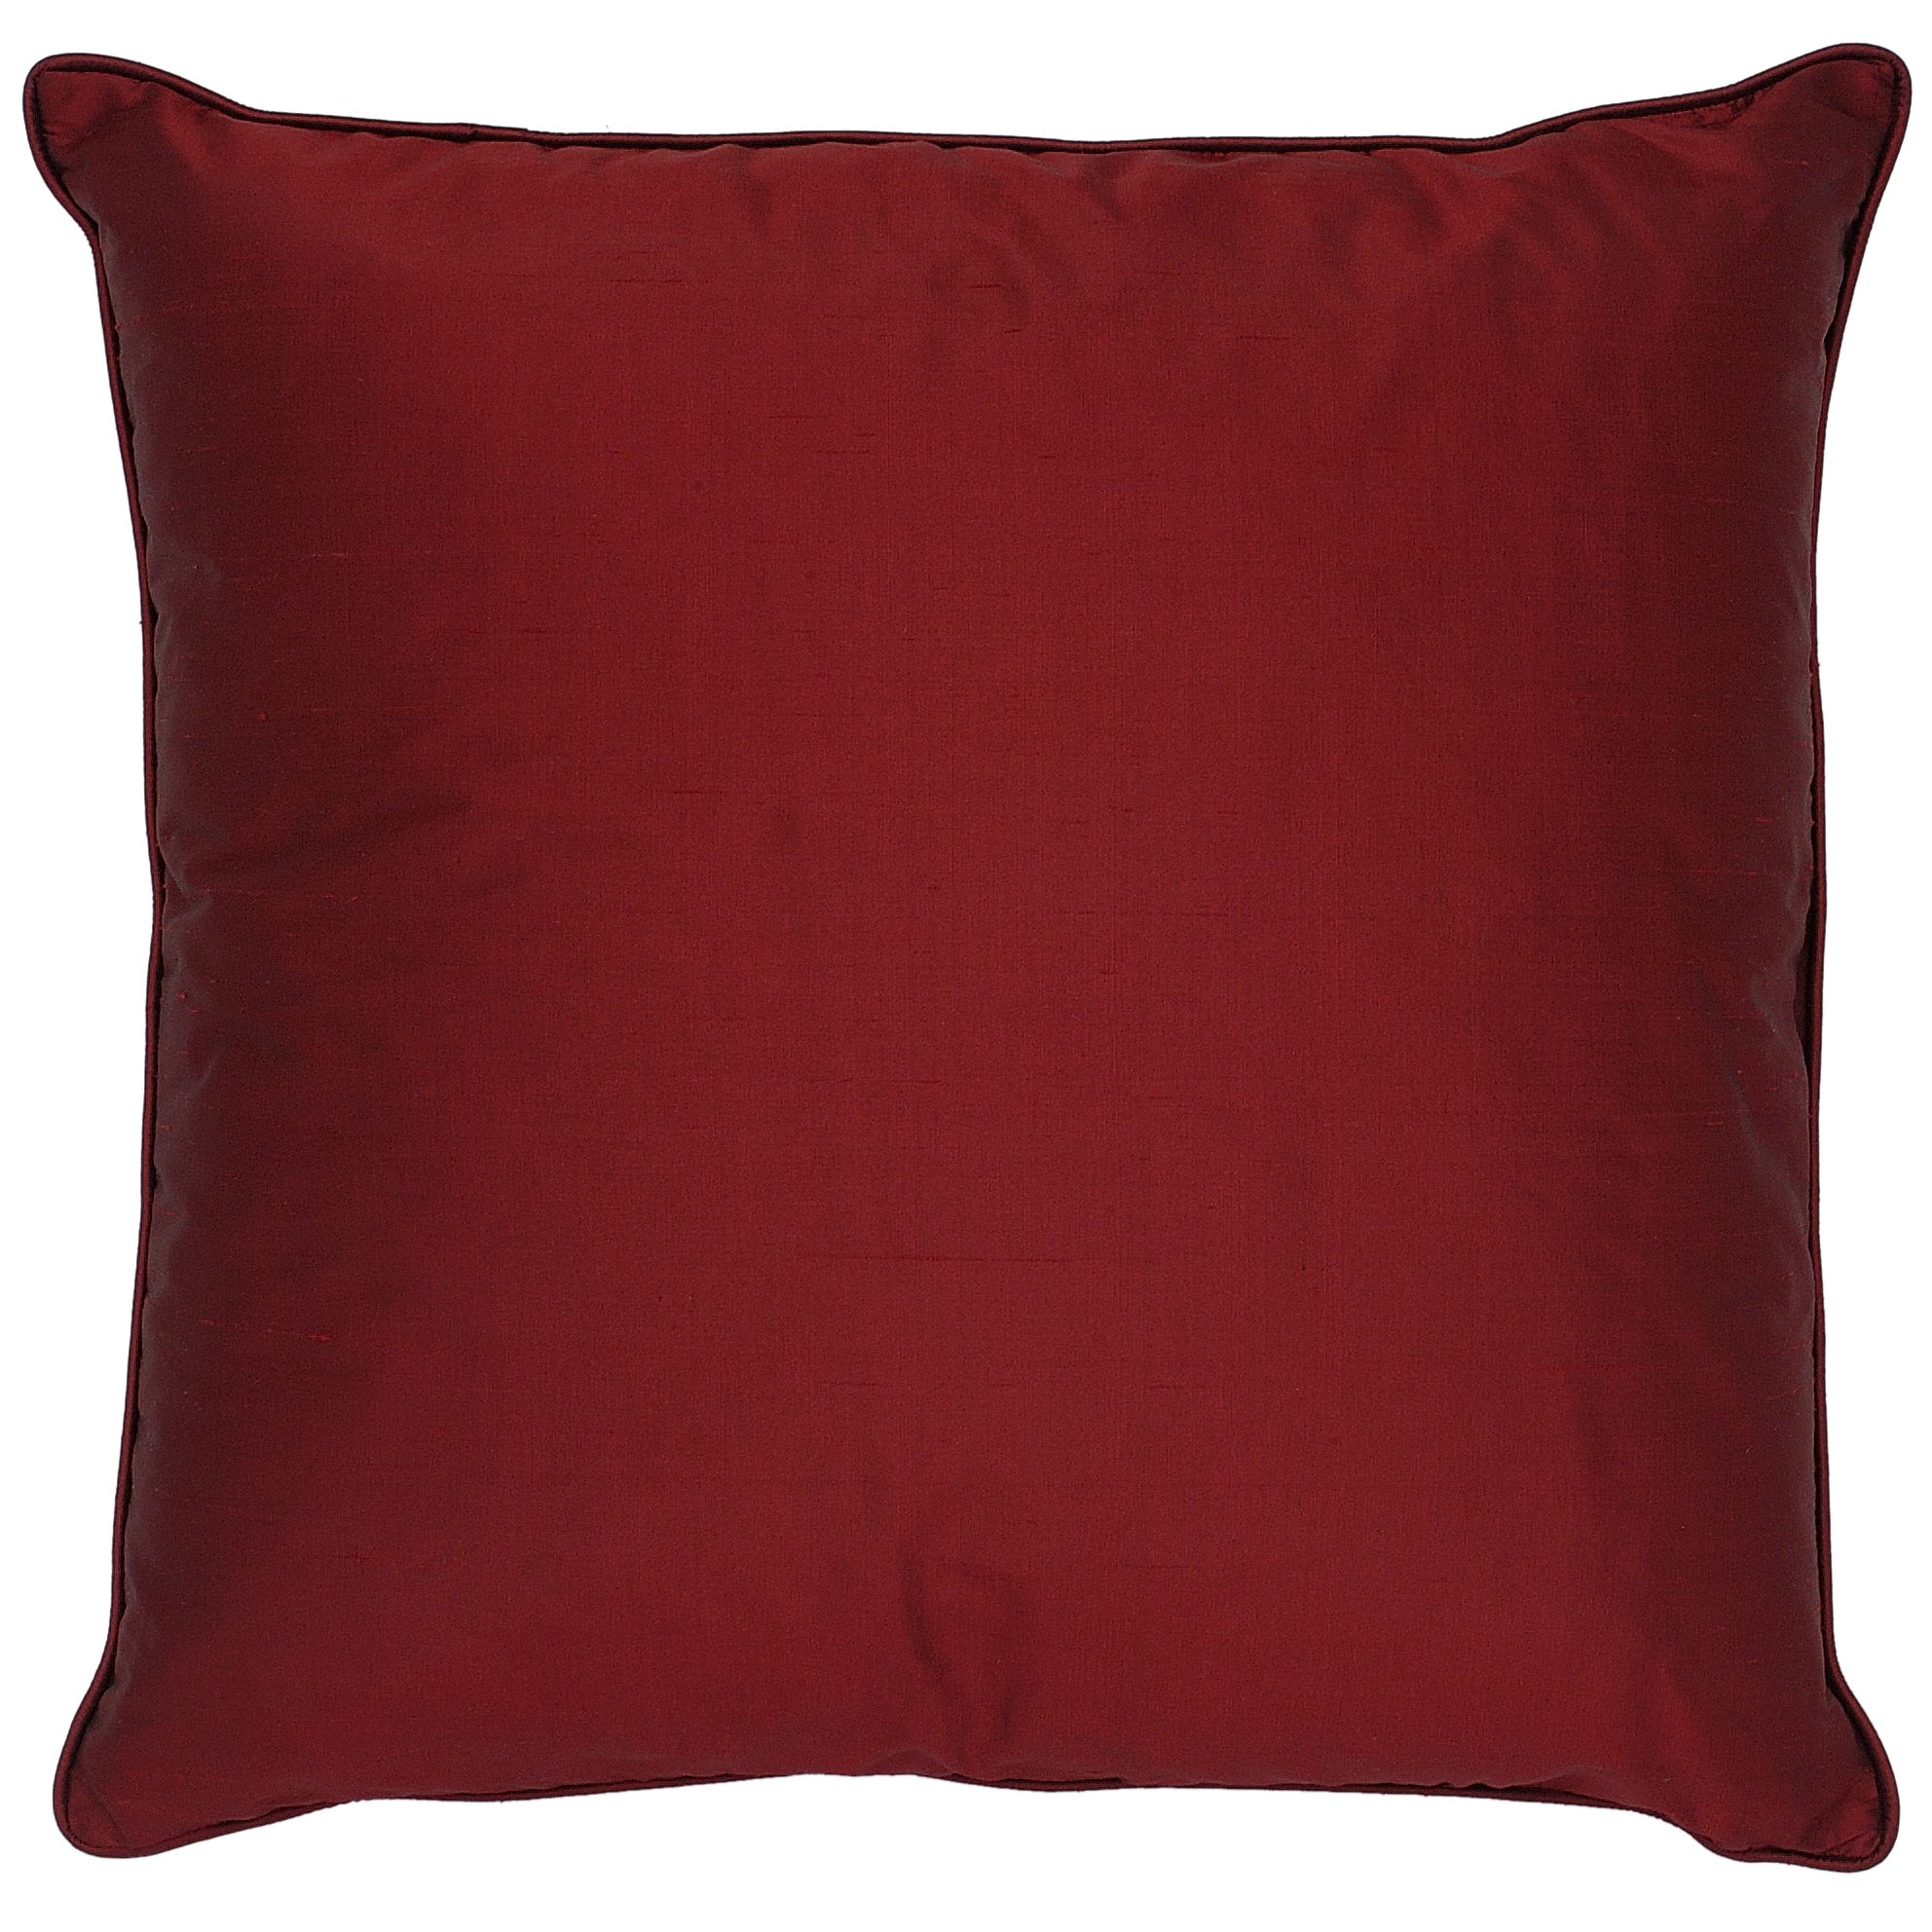 John Lewis Silk Cushion, Claret, One size